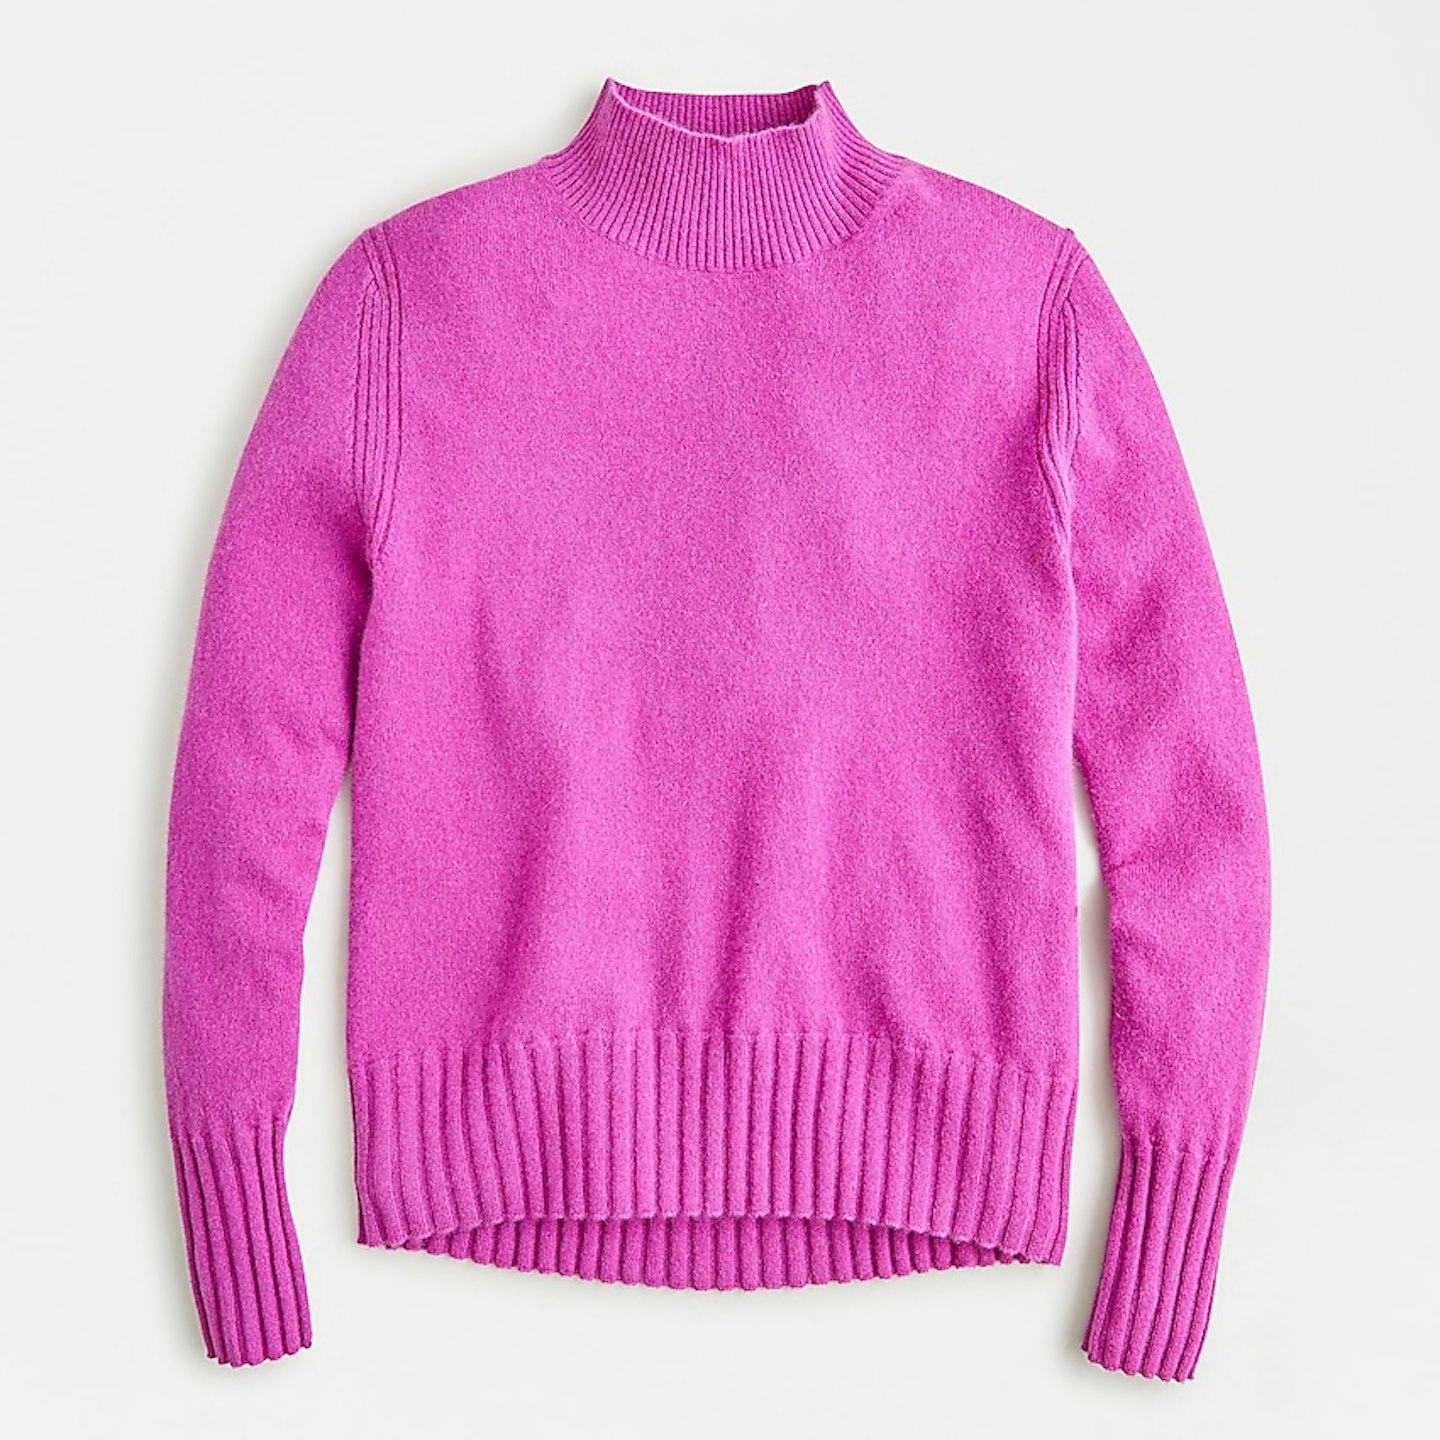 J Crew, Cashmere mockneck sweater, £170